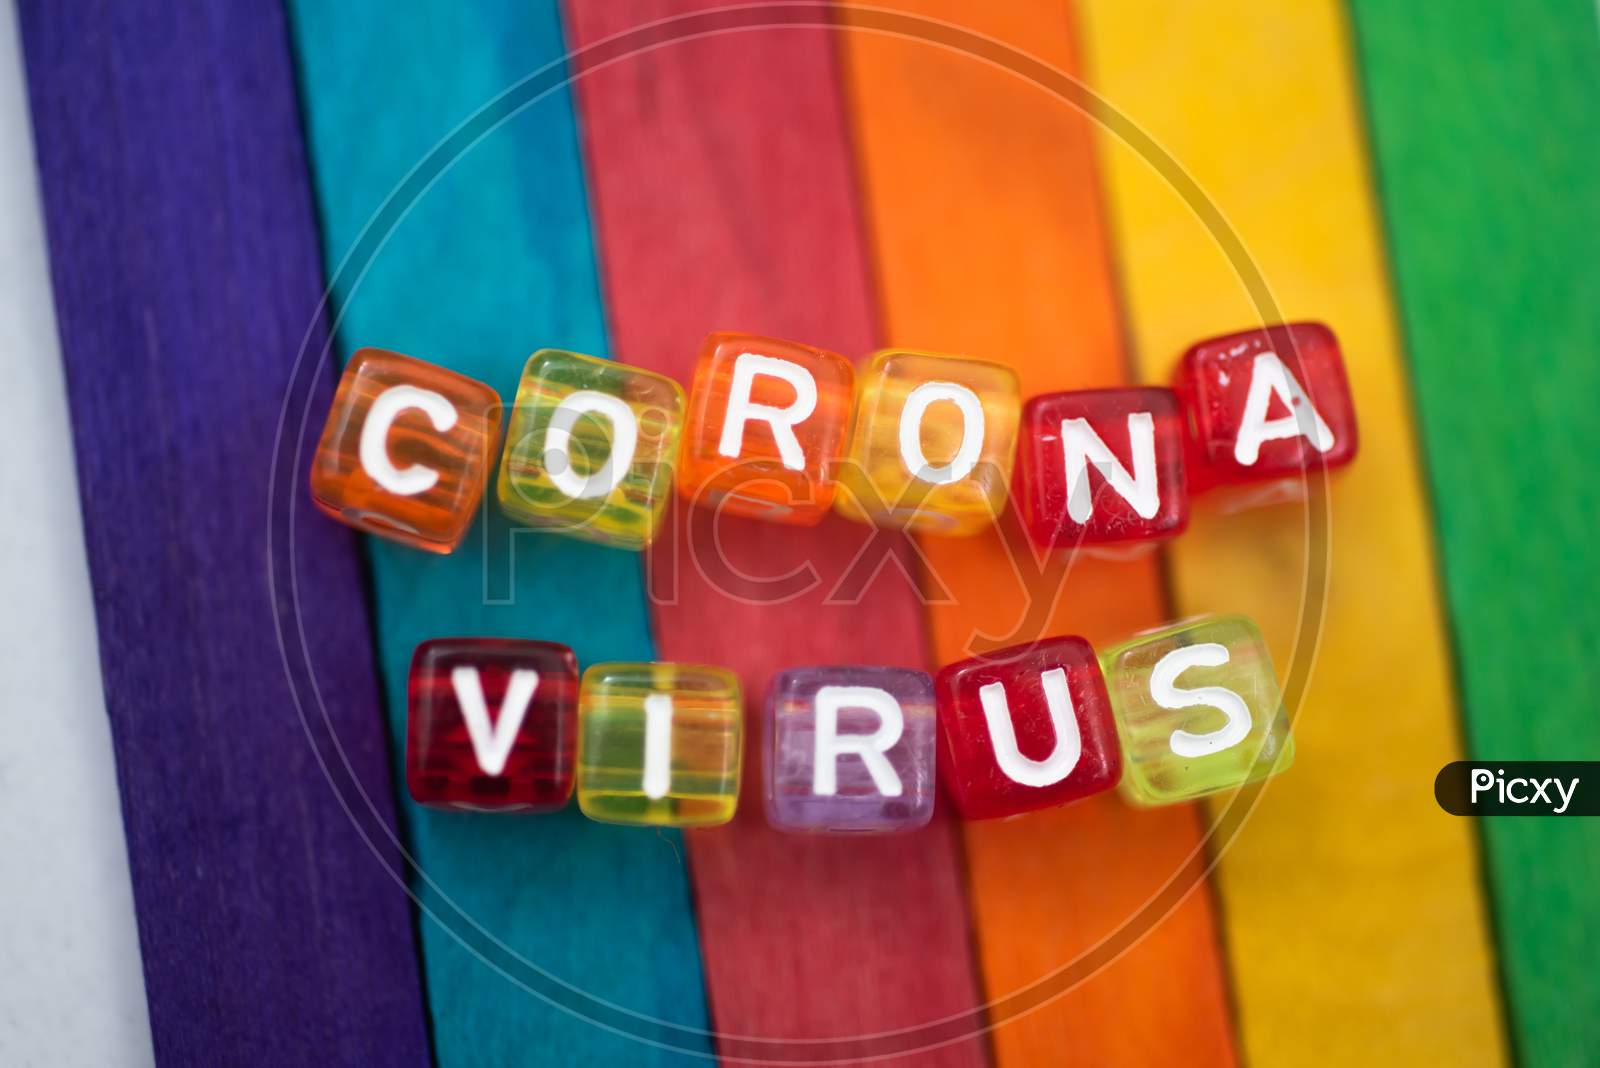 Colorful Word Corona Virus English Alphabet Cube On Colourfull Background, Selective Focus